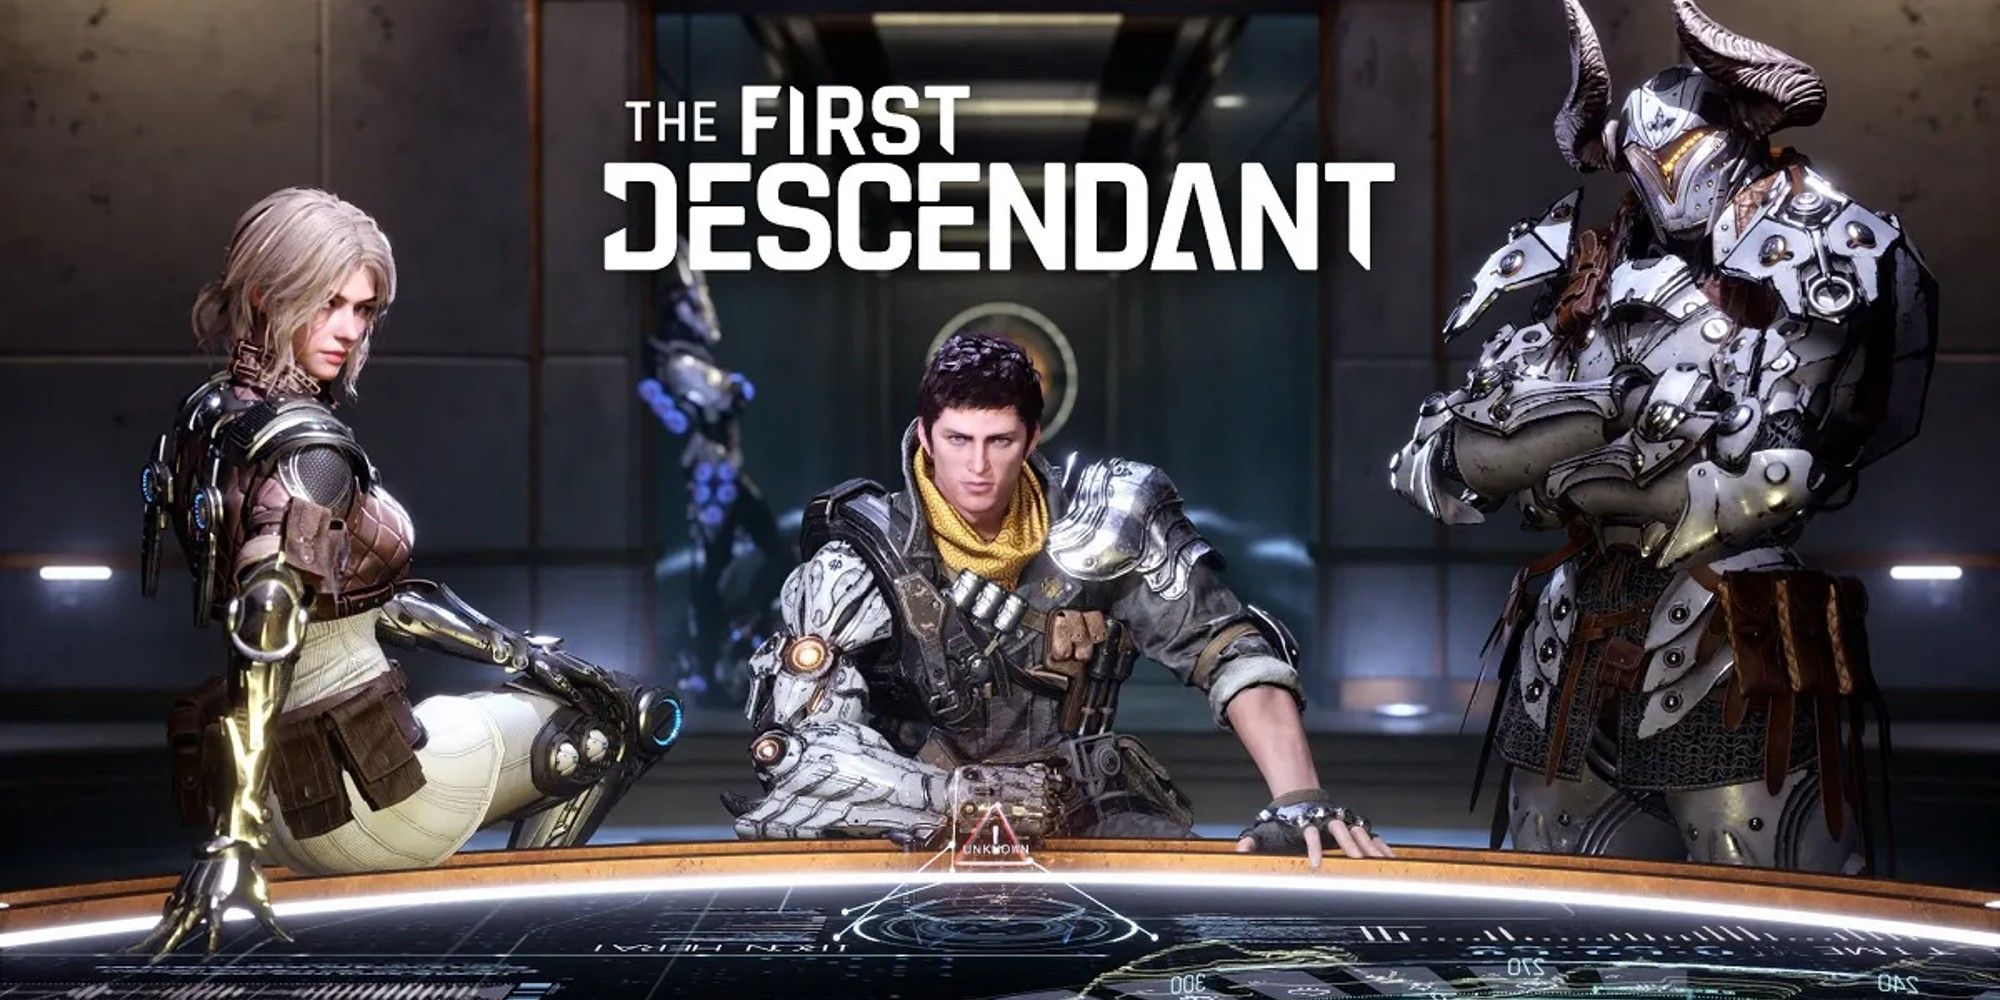 The First Descendant title with starter Descandants